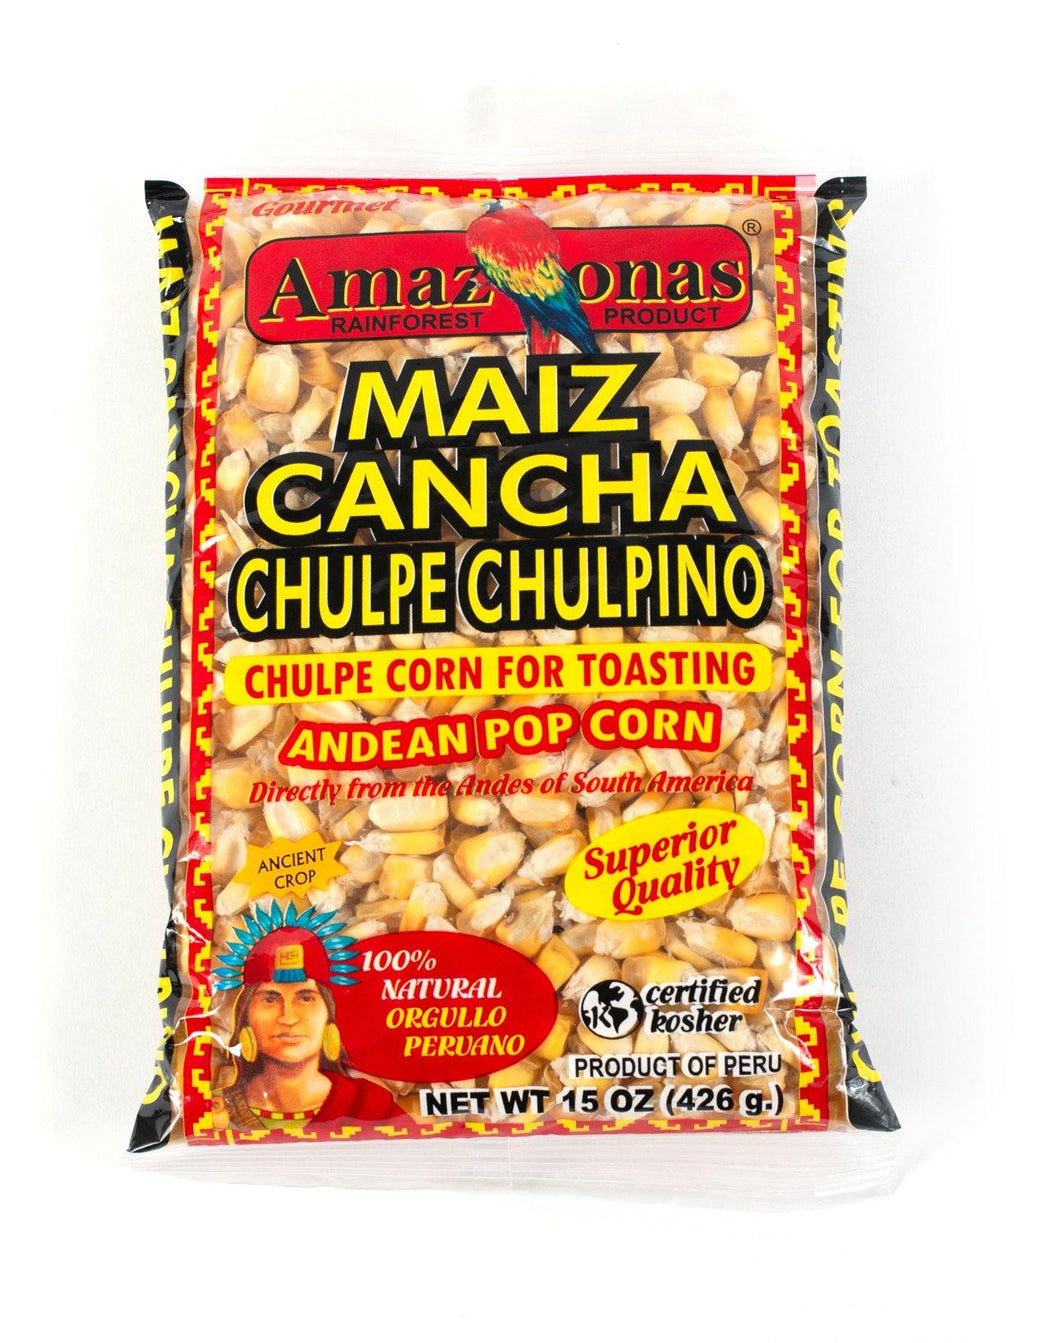 Amazonas Chulpe Corn/Andean Popcorn, Maiz Cancha Chulpe Chulpino - Amazonas Foods Online